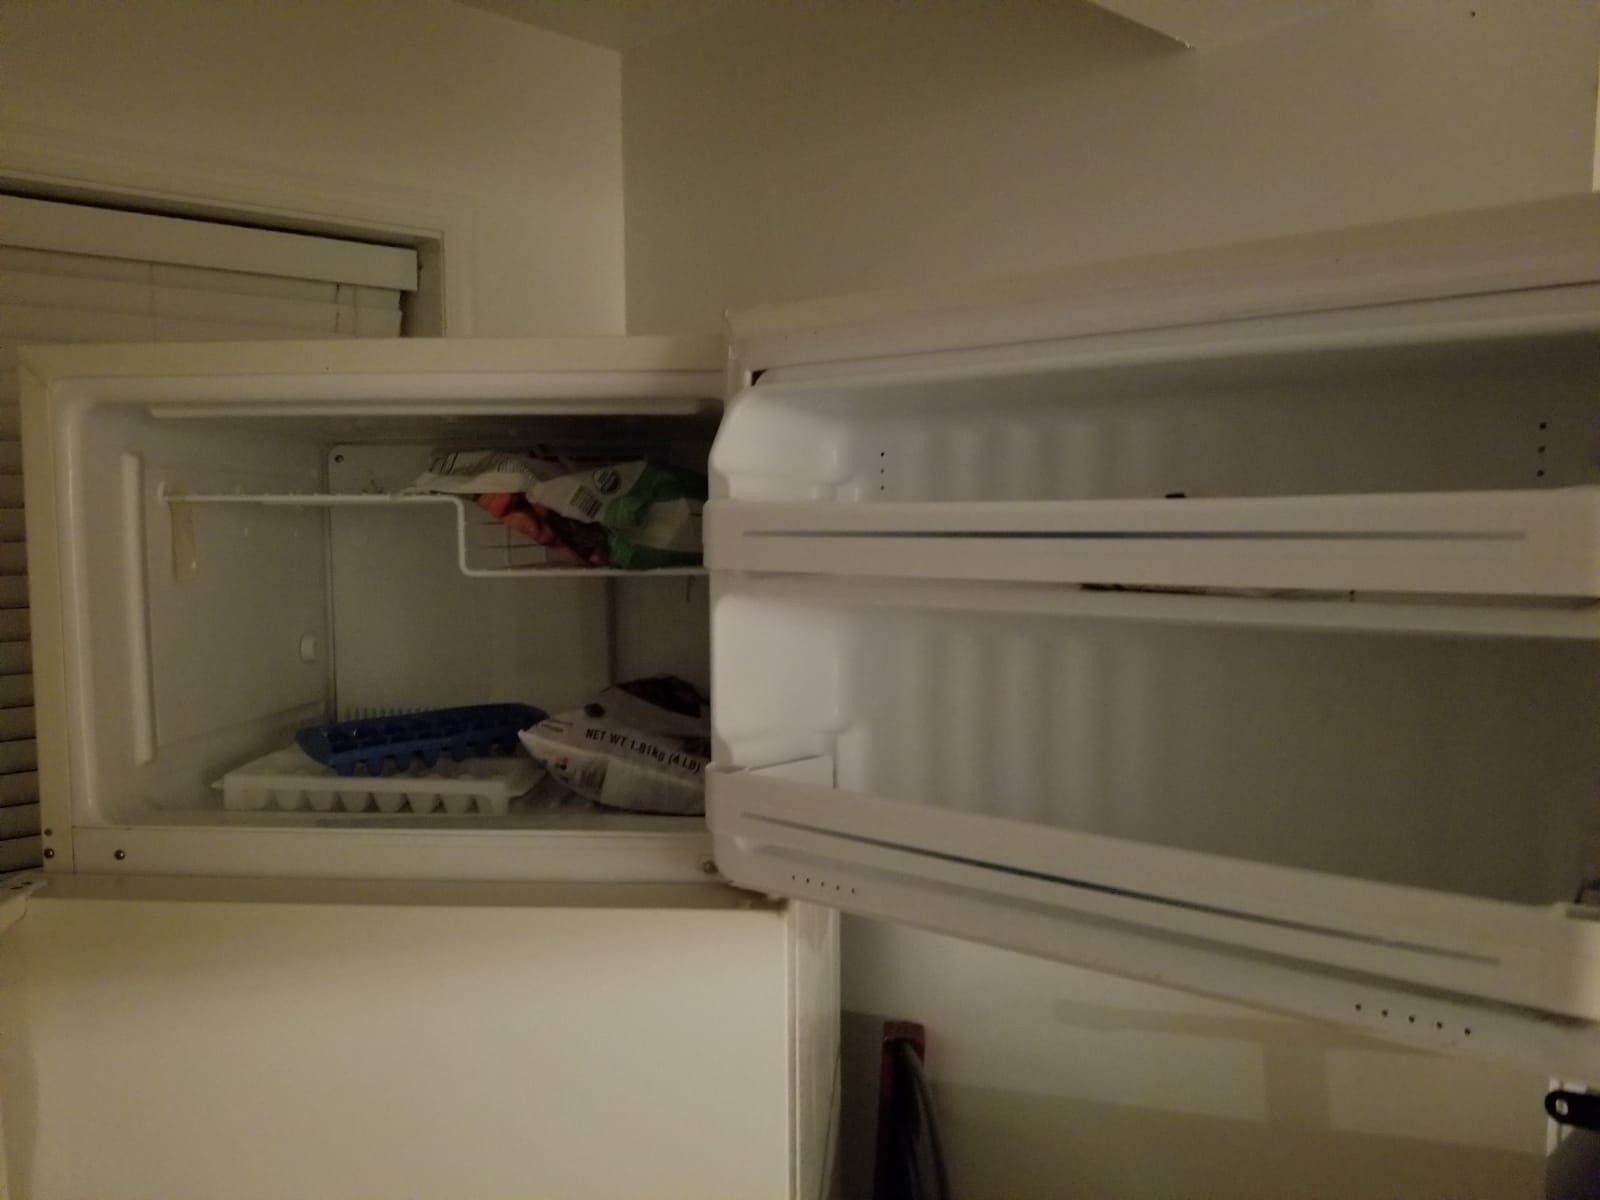 Refrigerator good condition.